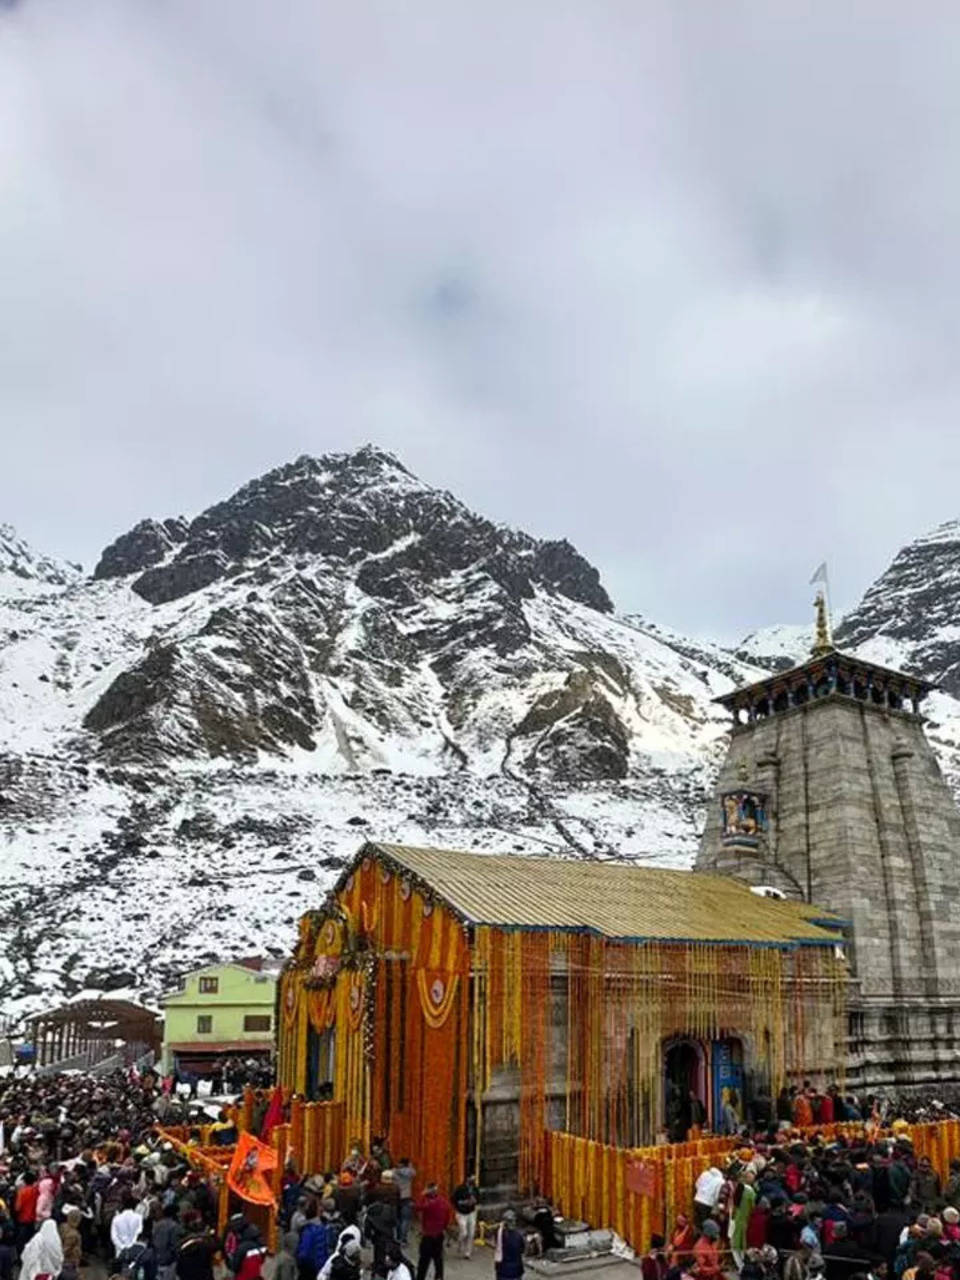 Kedarnath temple opens to pilgrims under snow | Times of India